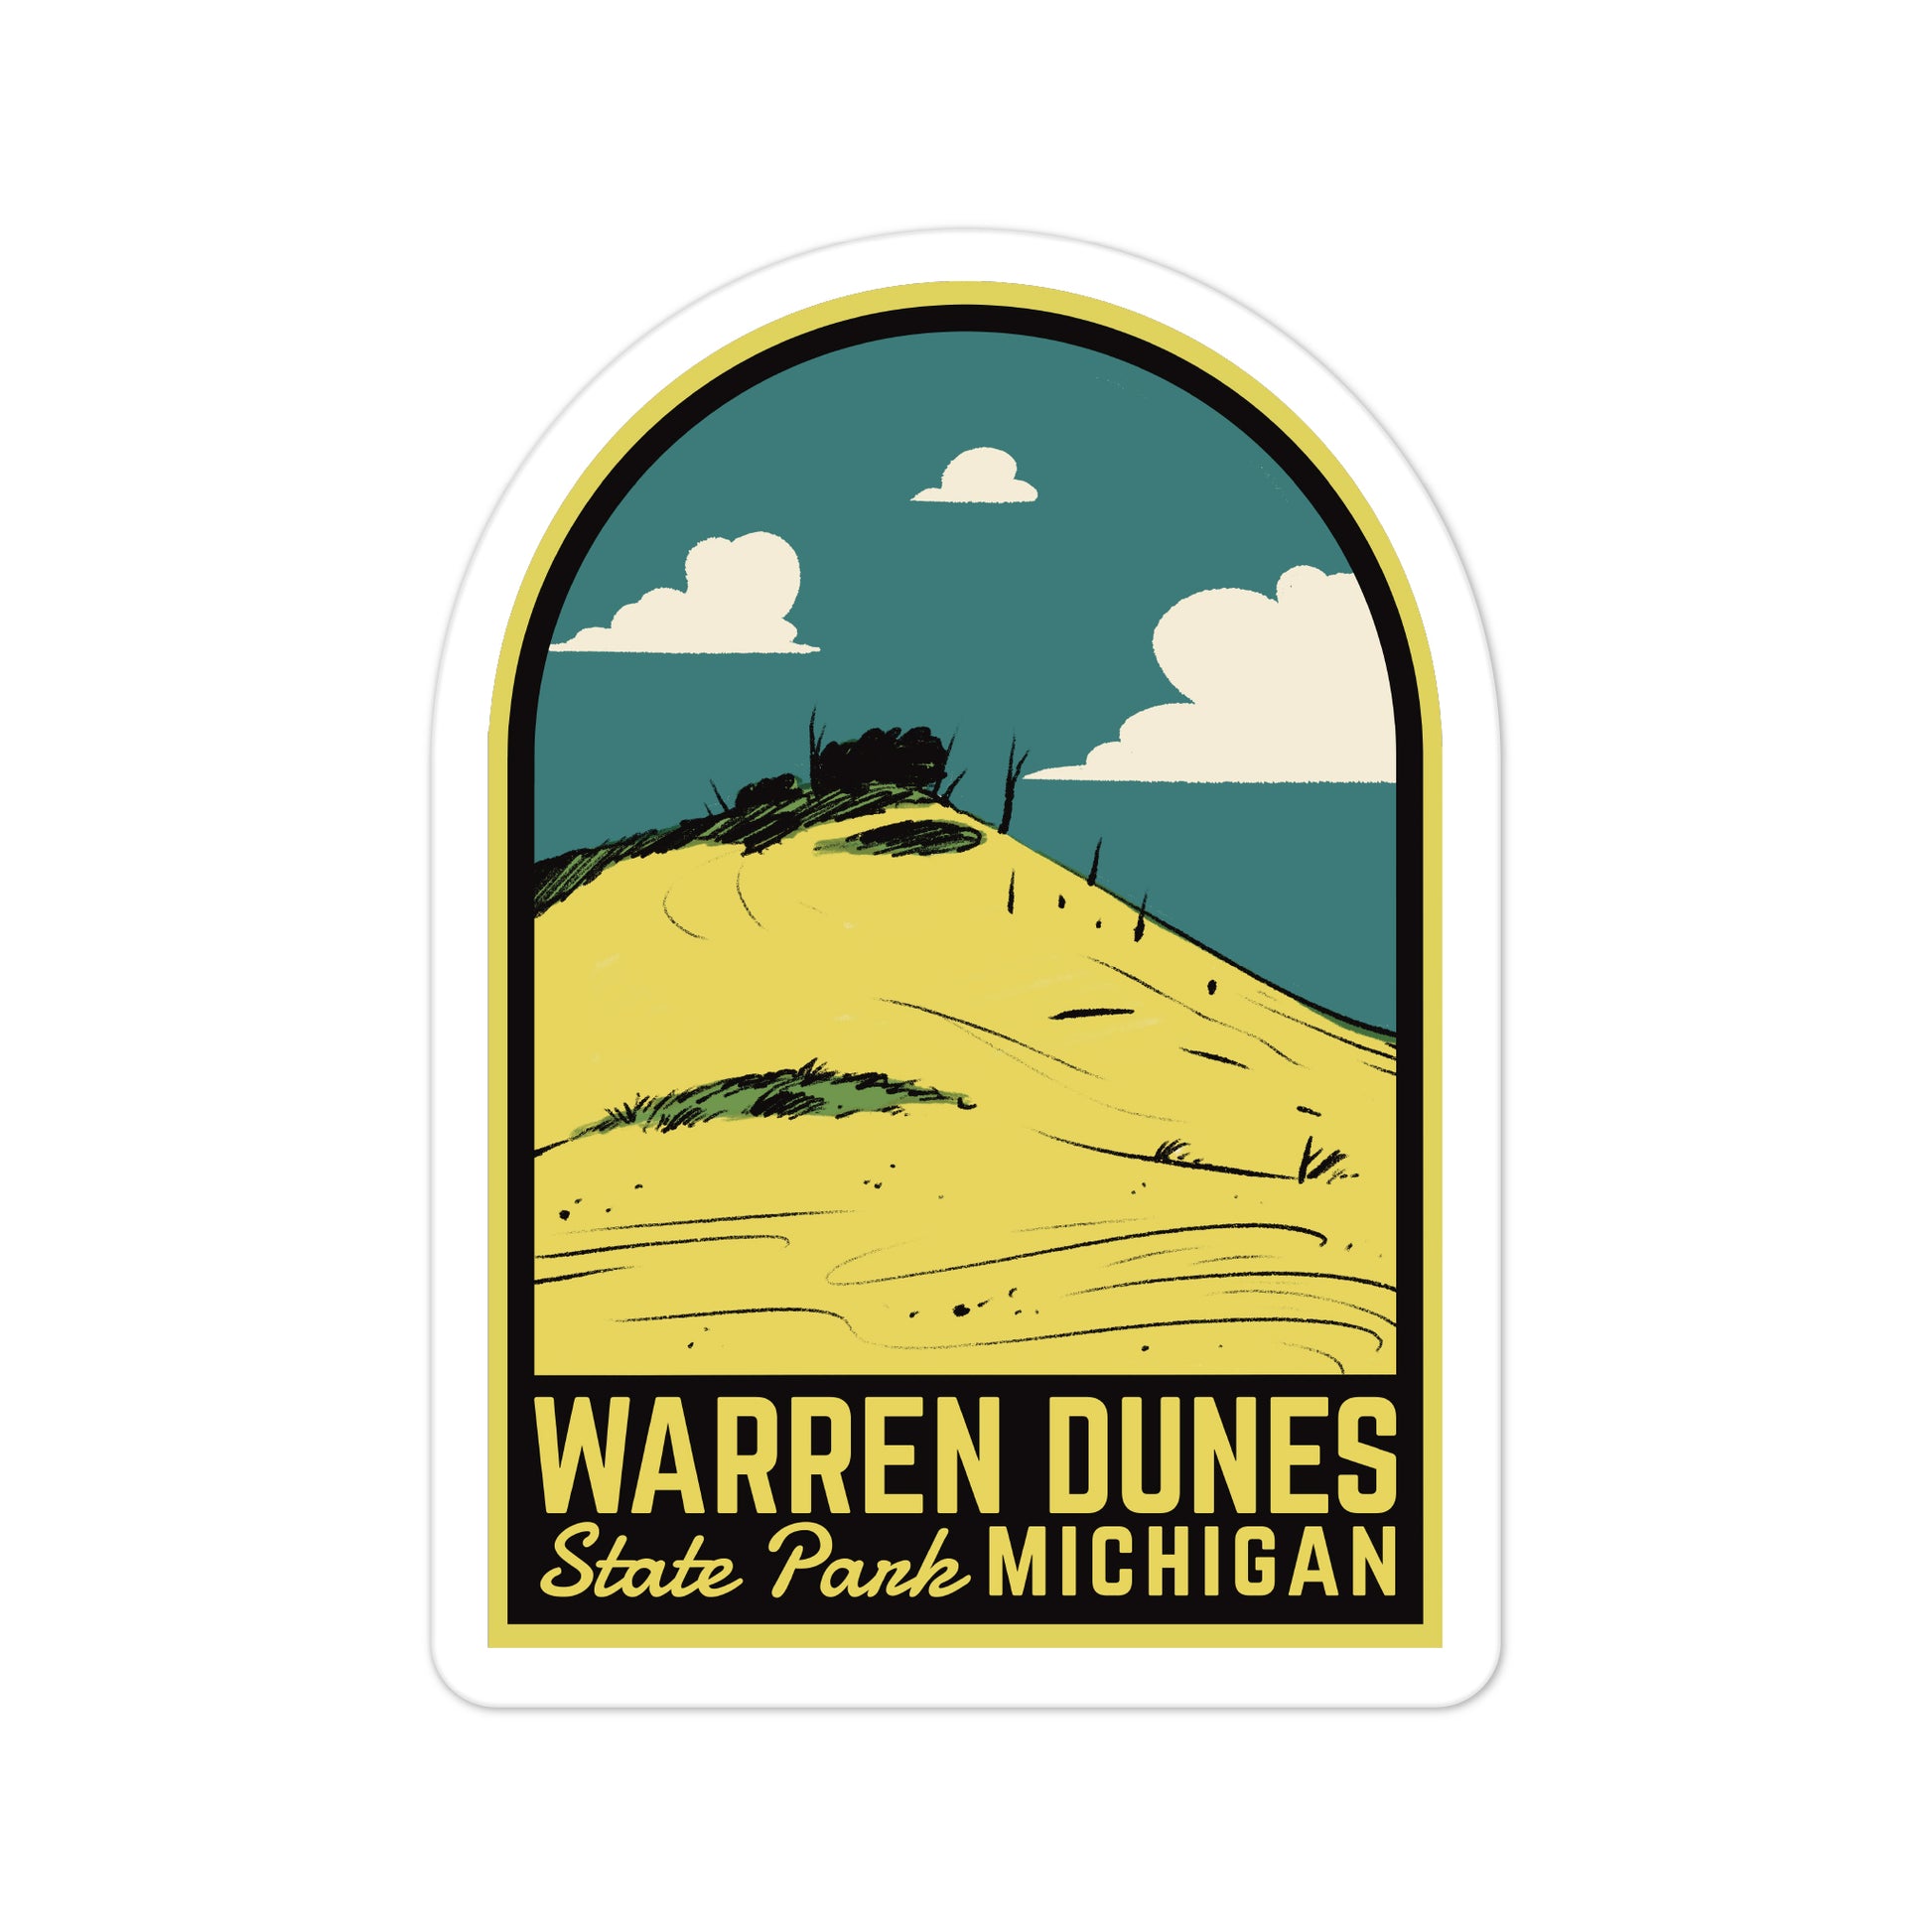 A sticker of Warren Dunes State Park